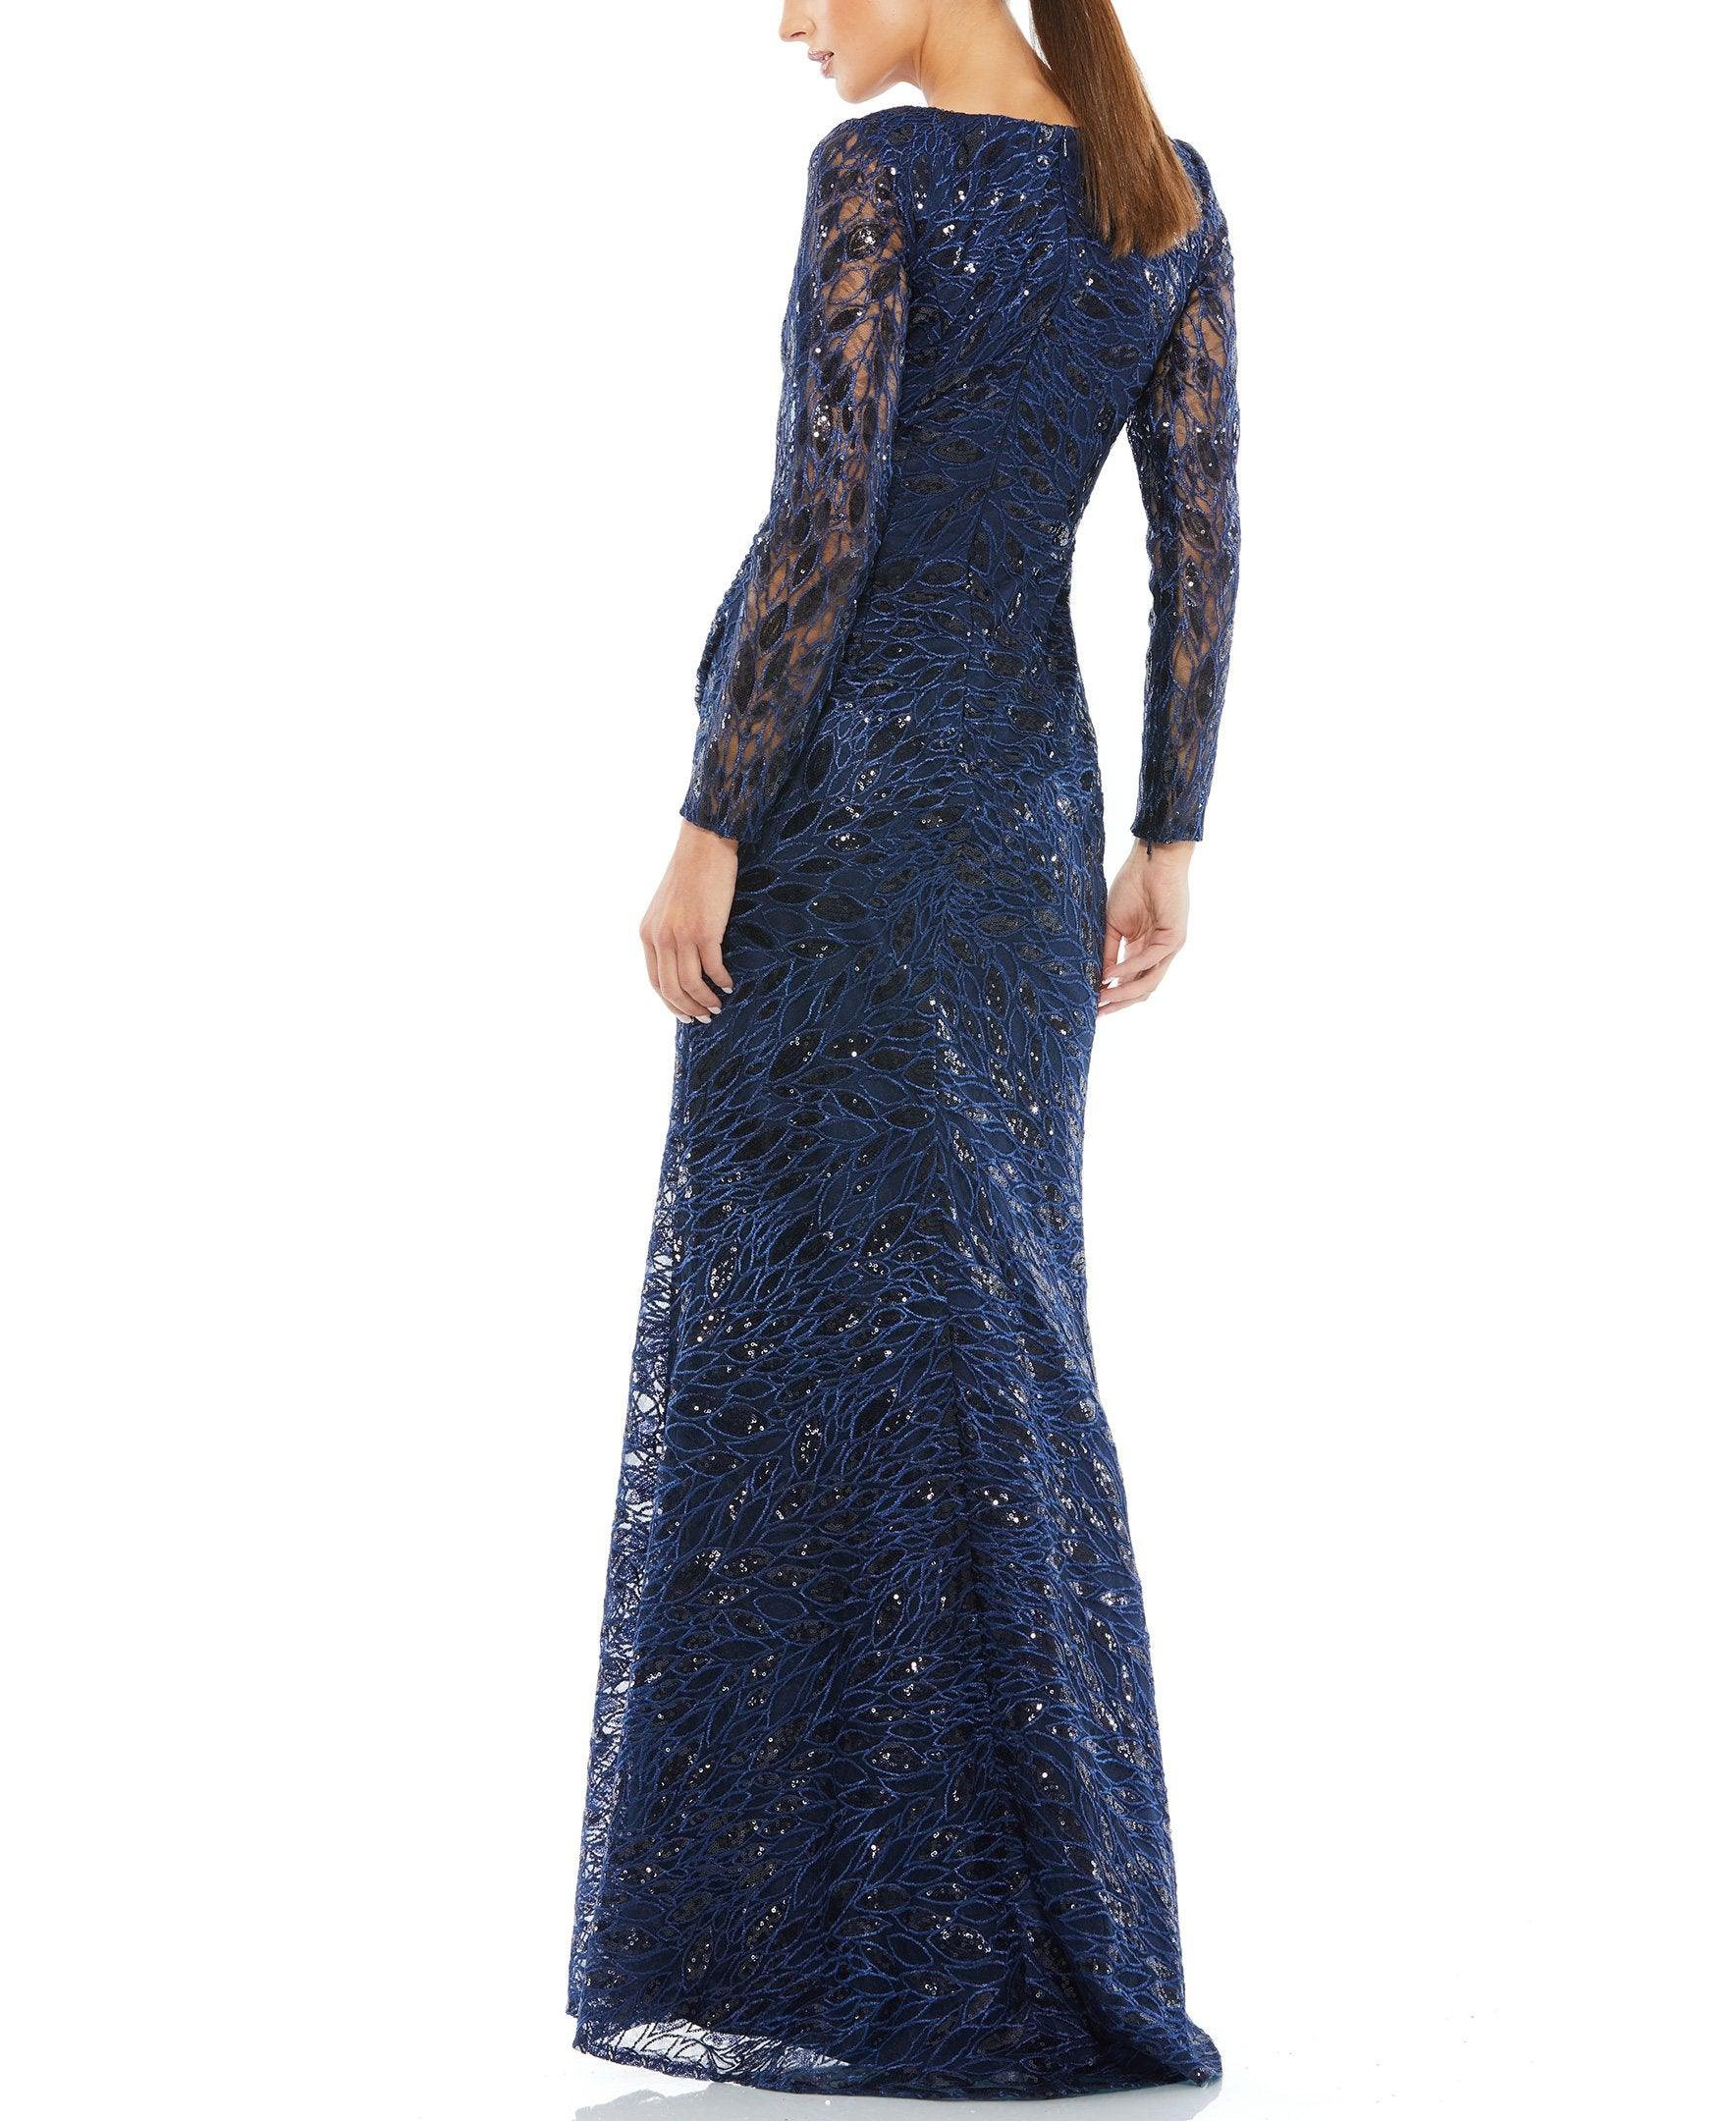 Mac Duggal Long Sleeve Formal Evening Dress 12412 - The Dress Outlet